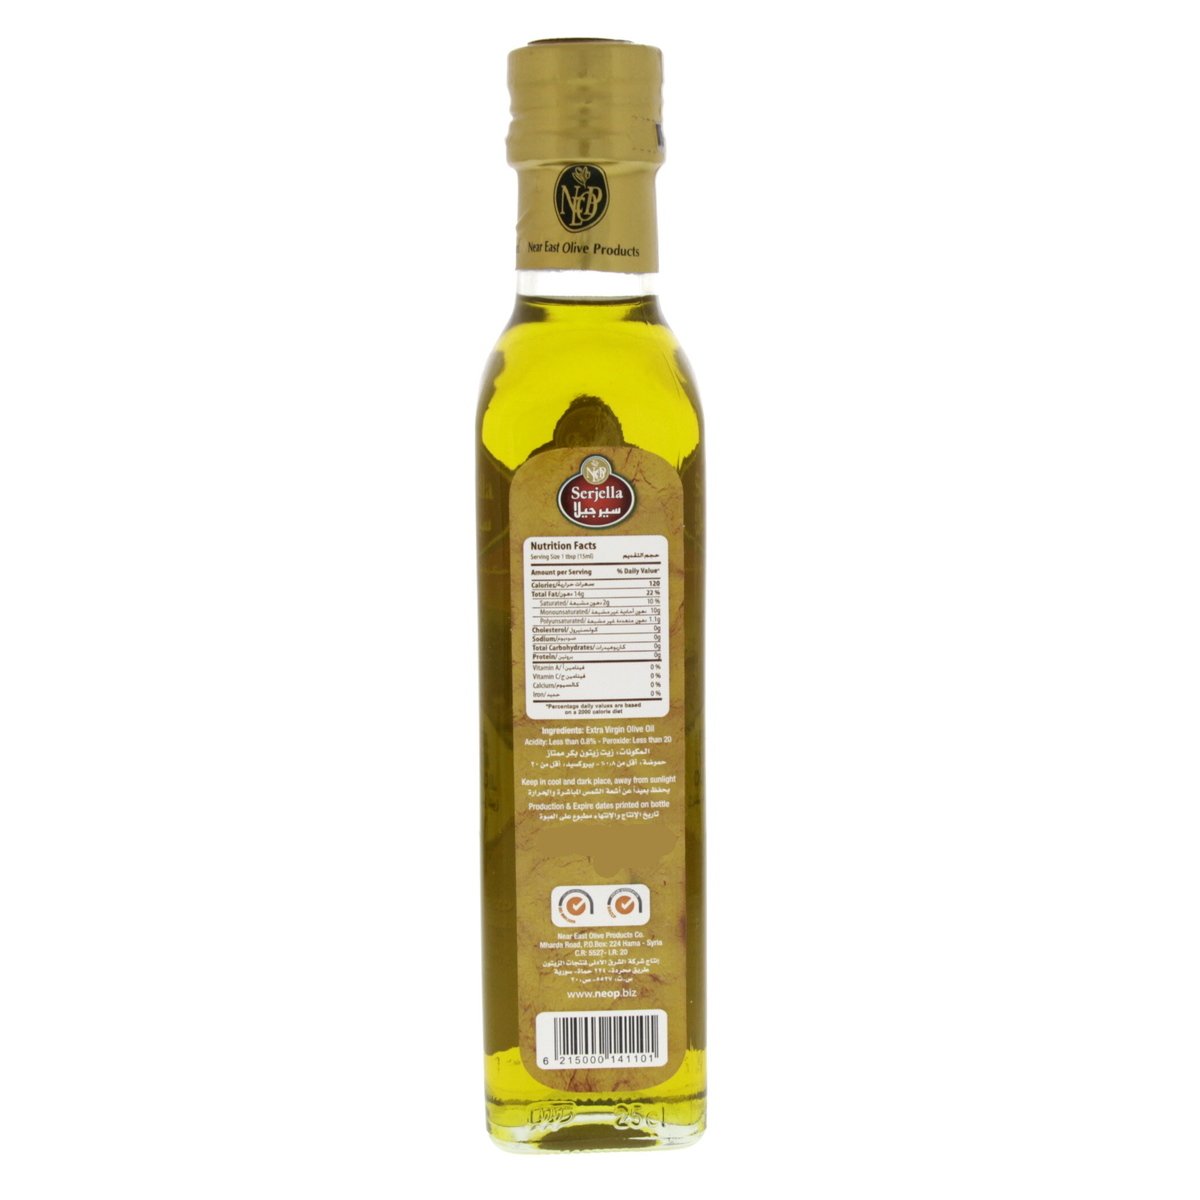 Serjella Extra Virgin Olive Oil 250 ml